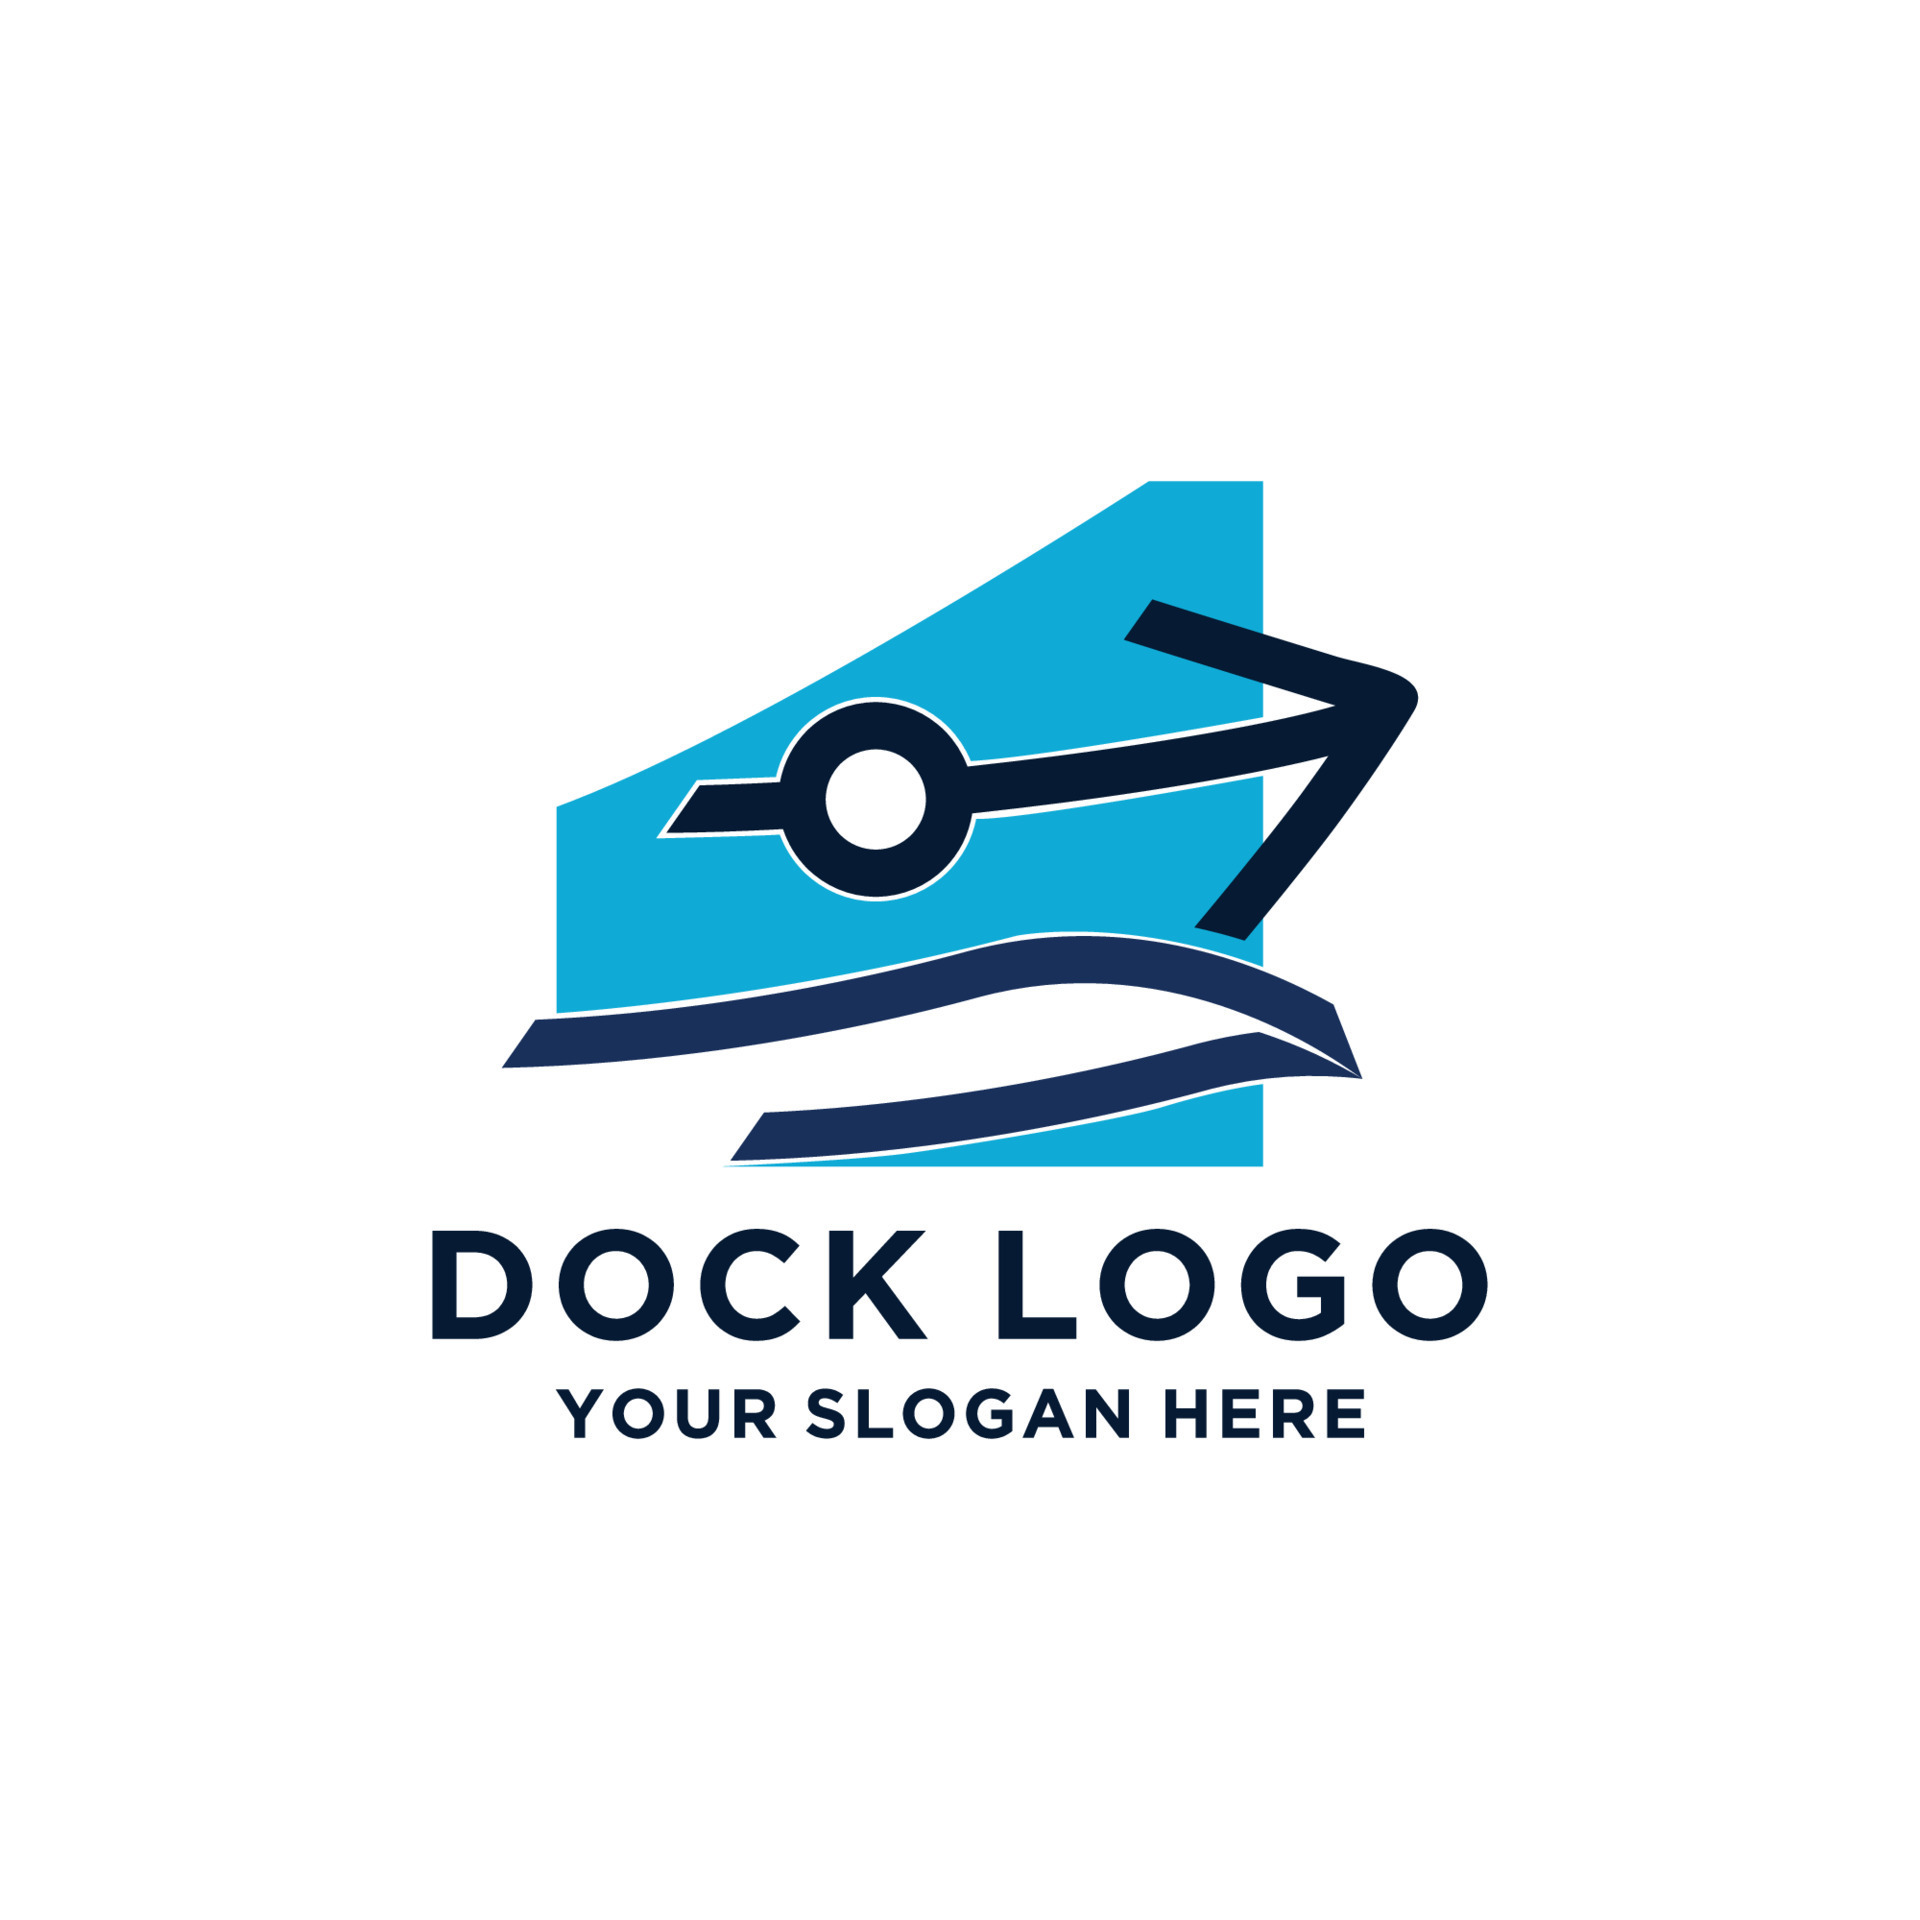 Dock logo icon vector image 12650372 Vector Art at Vecteezy